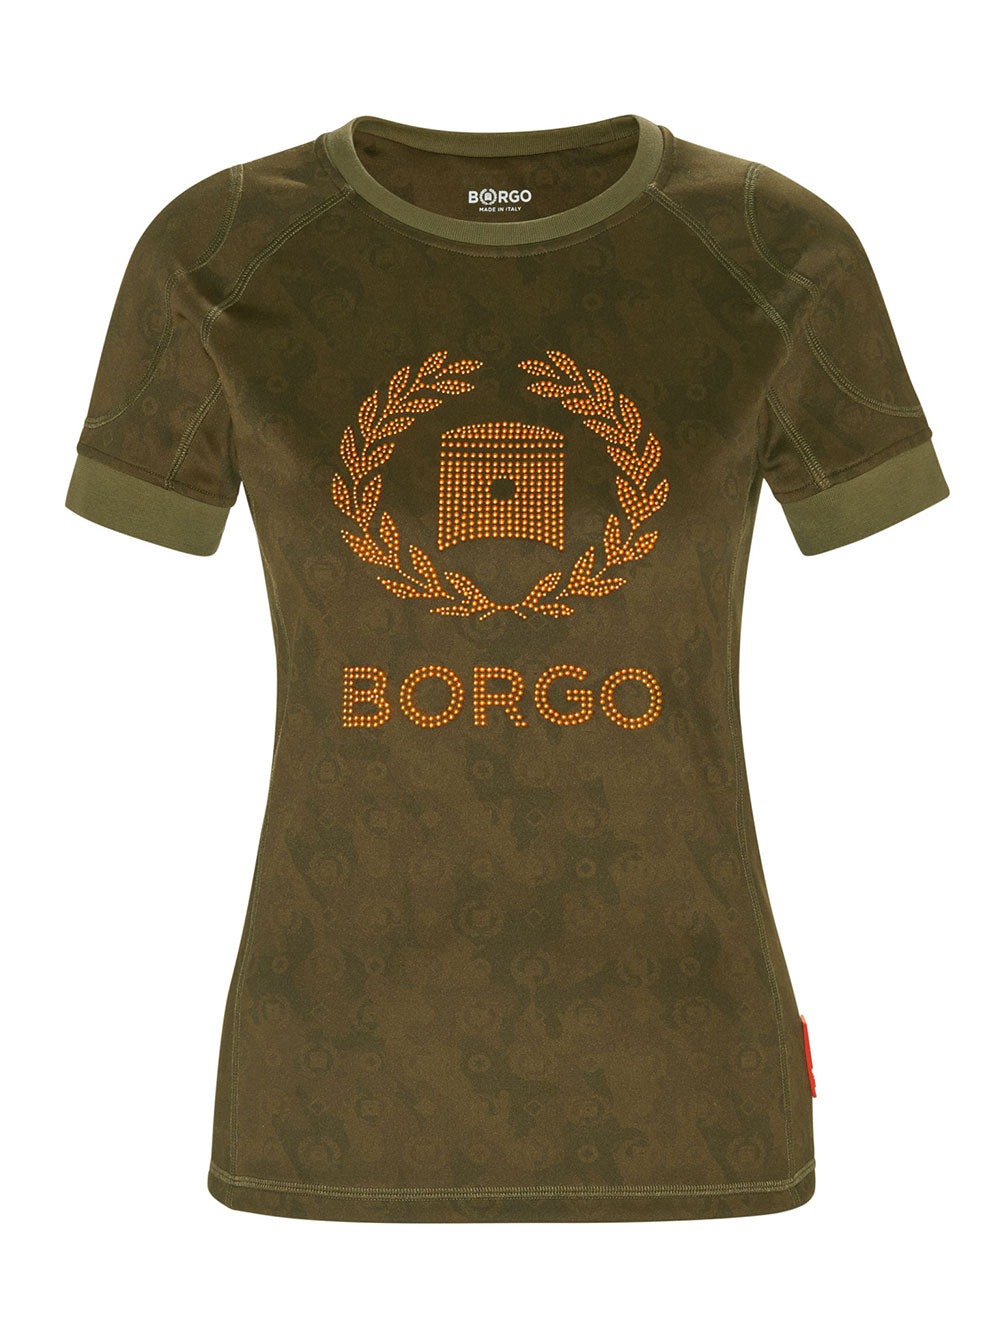 BORGO Andalusien Miura Camo T-Shirt